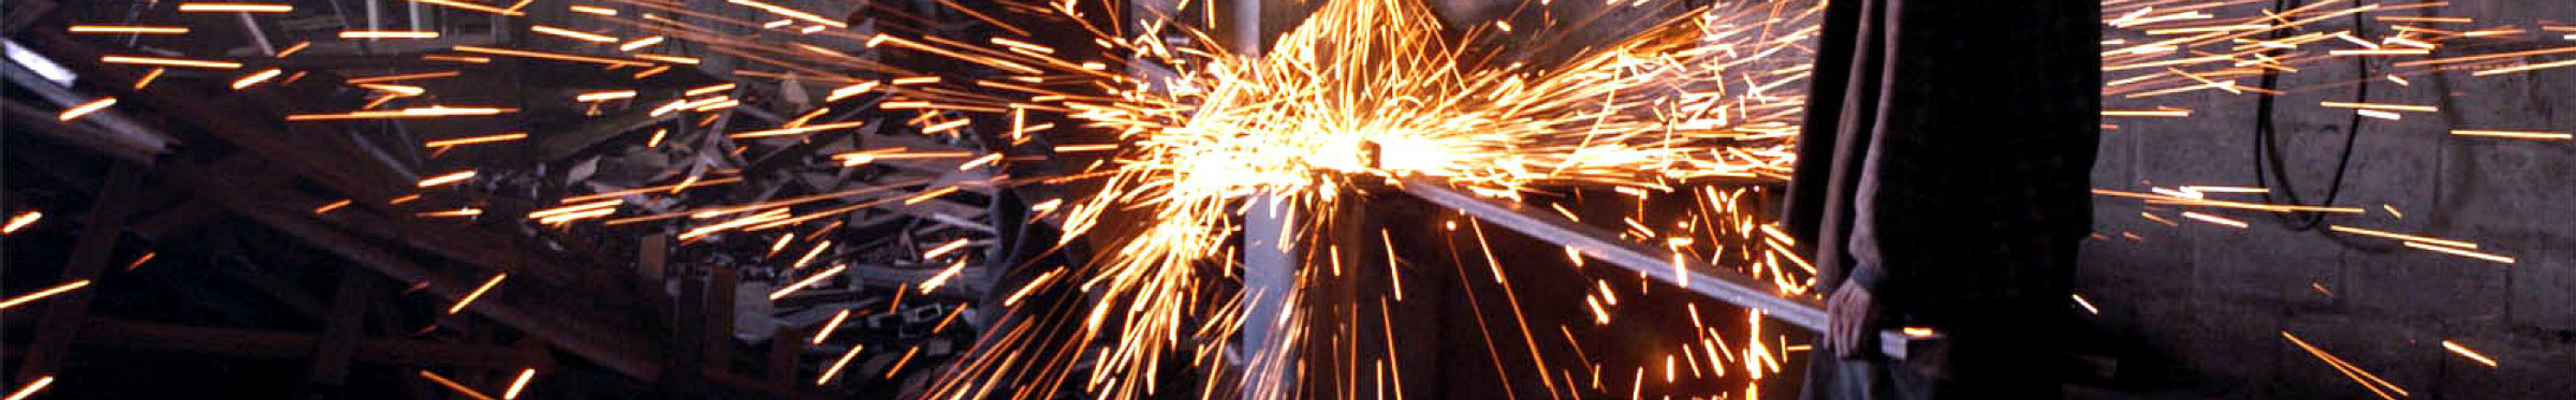 sparks in metal factory